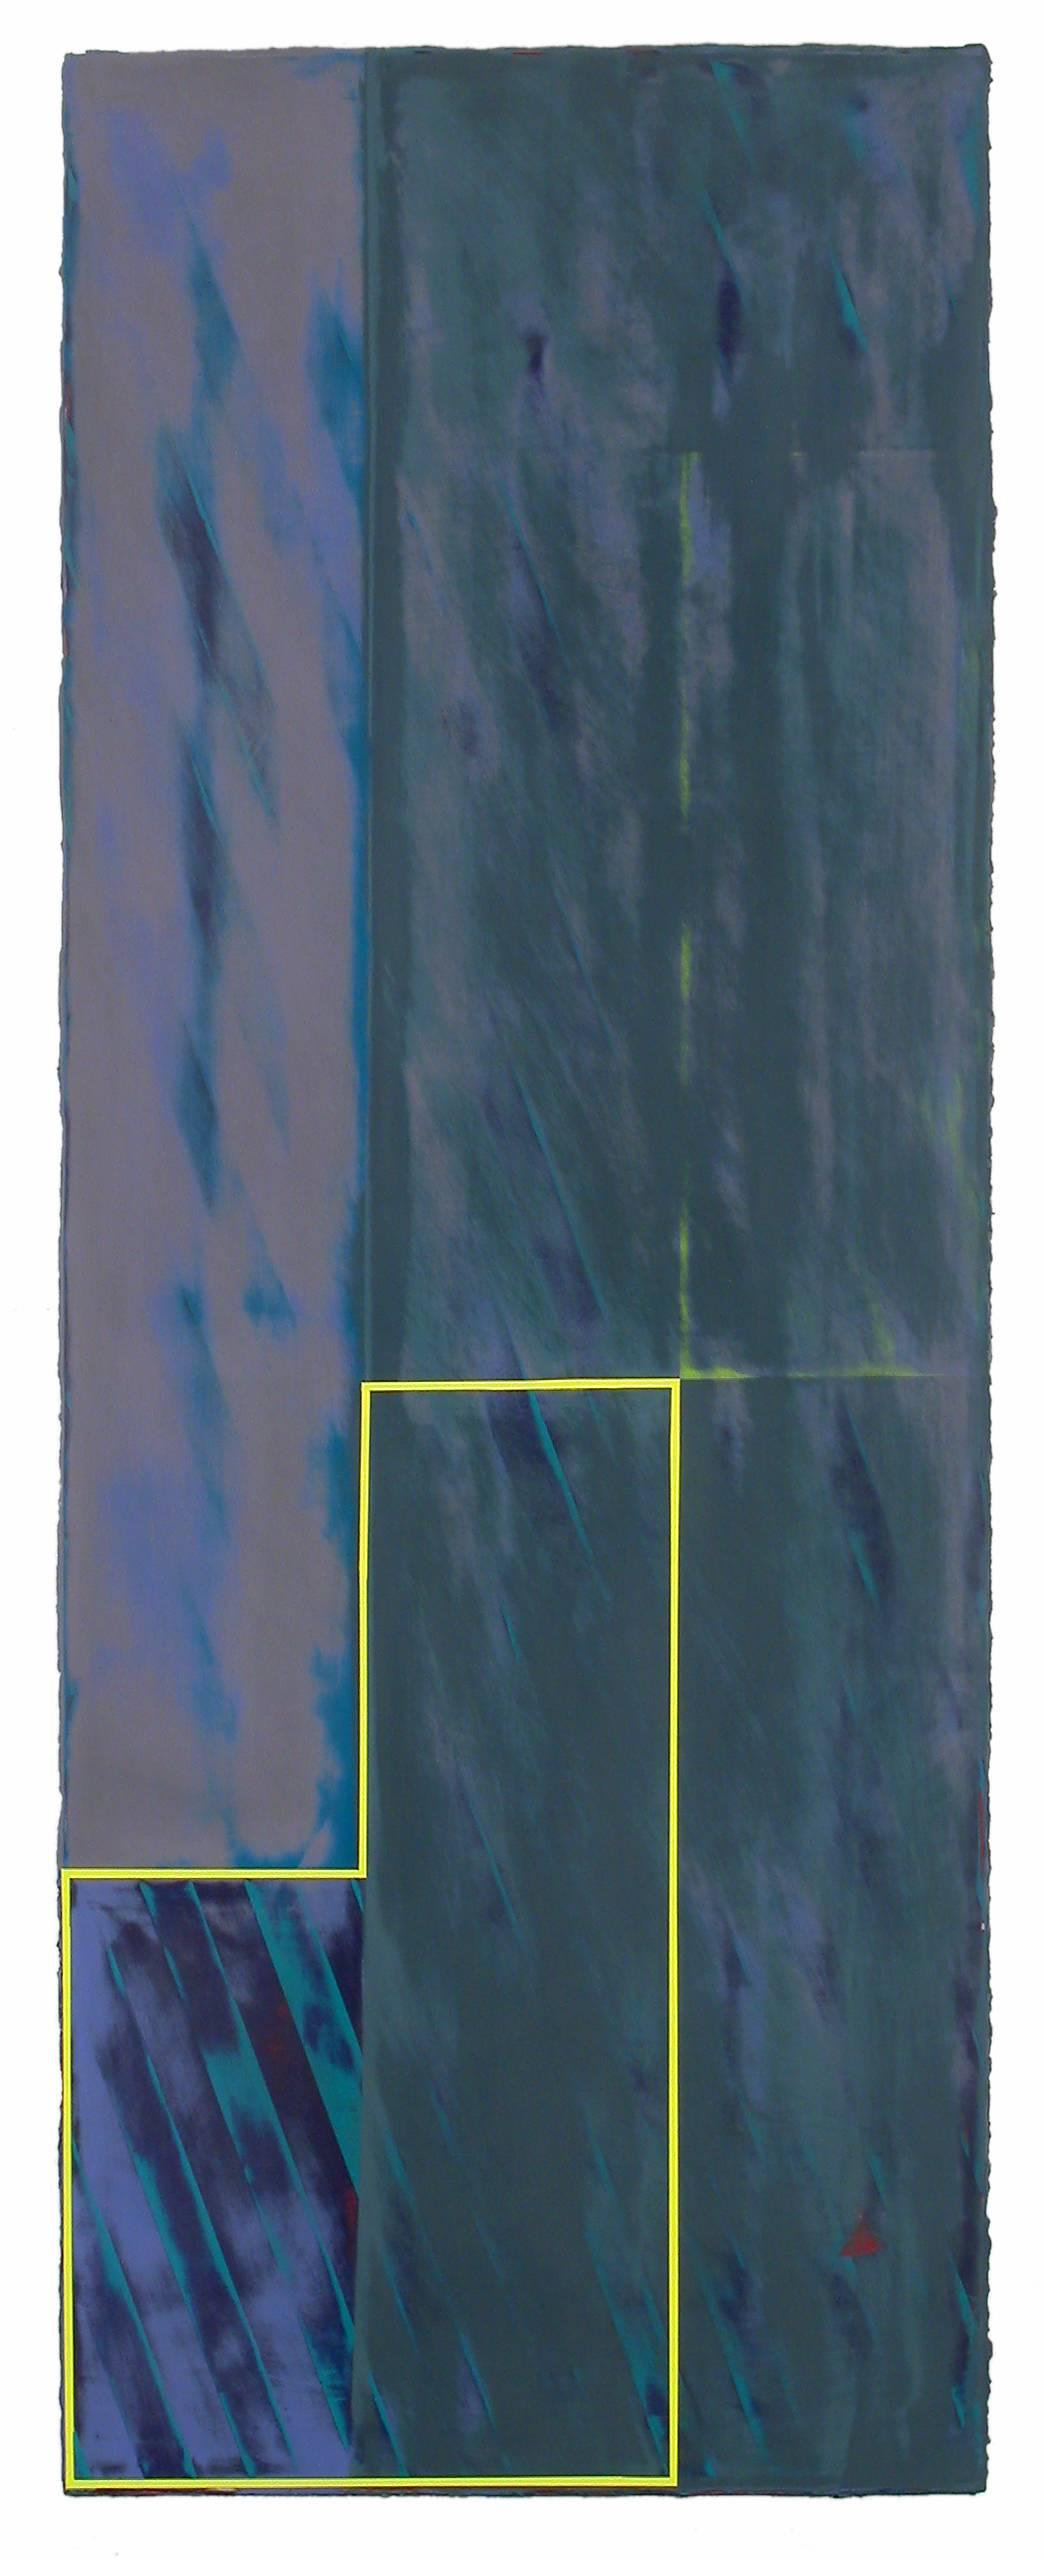 Kellyann Burns Abstract Painting - 7:15 PM 5/19/16